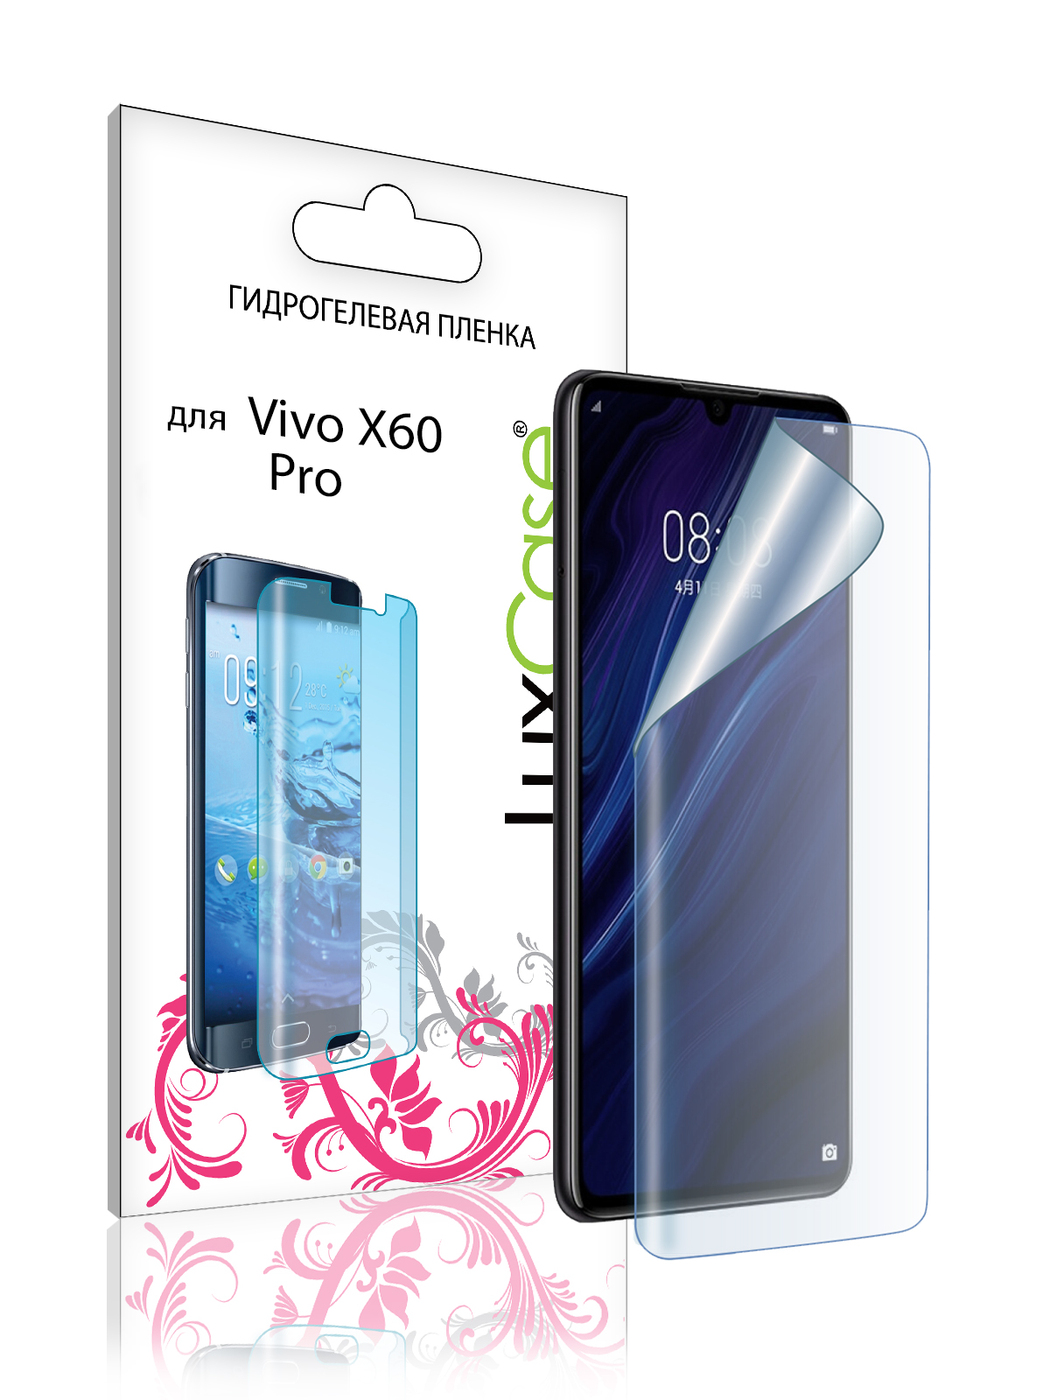 Пленка гидрогелевая LuxCase для Vivo X60 Pro Front 0.14mm Transparent 86001 гидрогелевая пленка luxcase для vivo x60 pro front and back 0 14mm transparent 86003